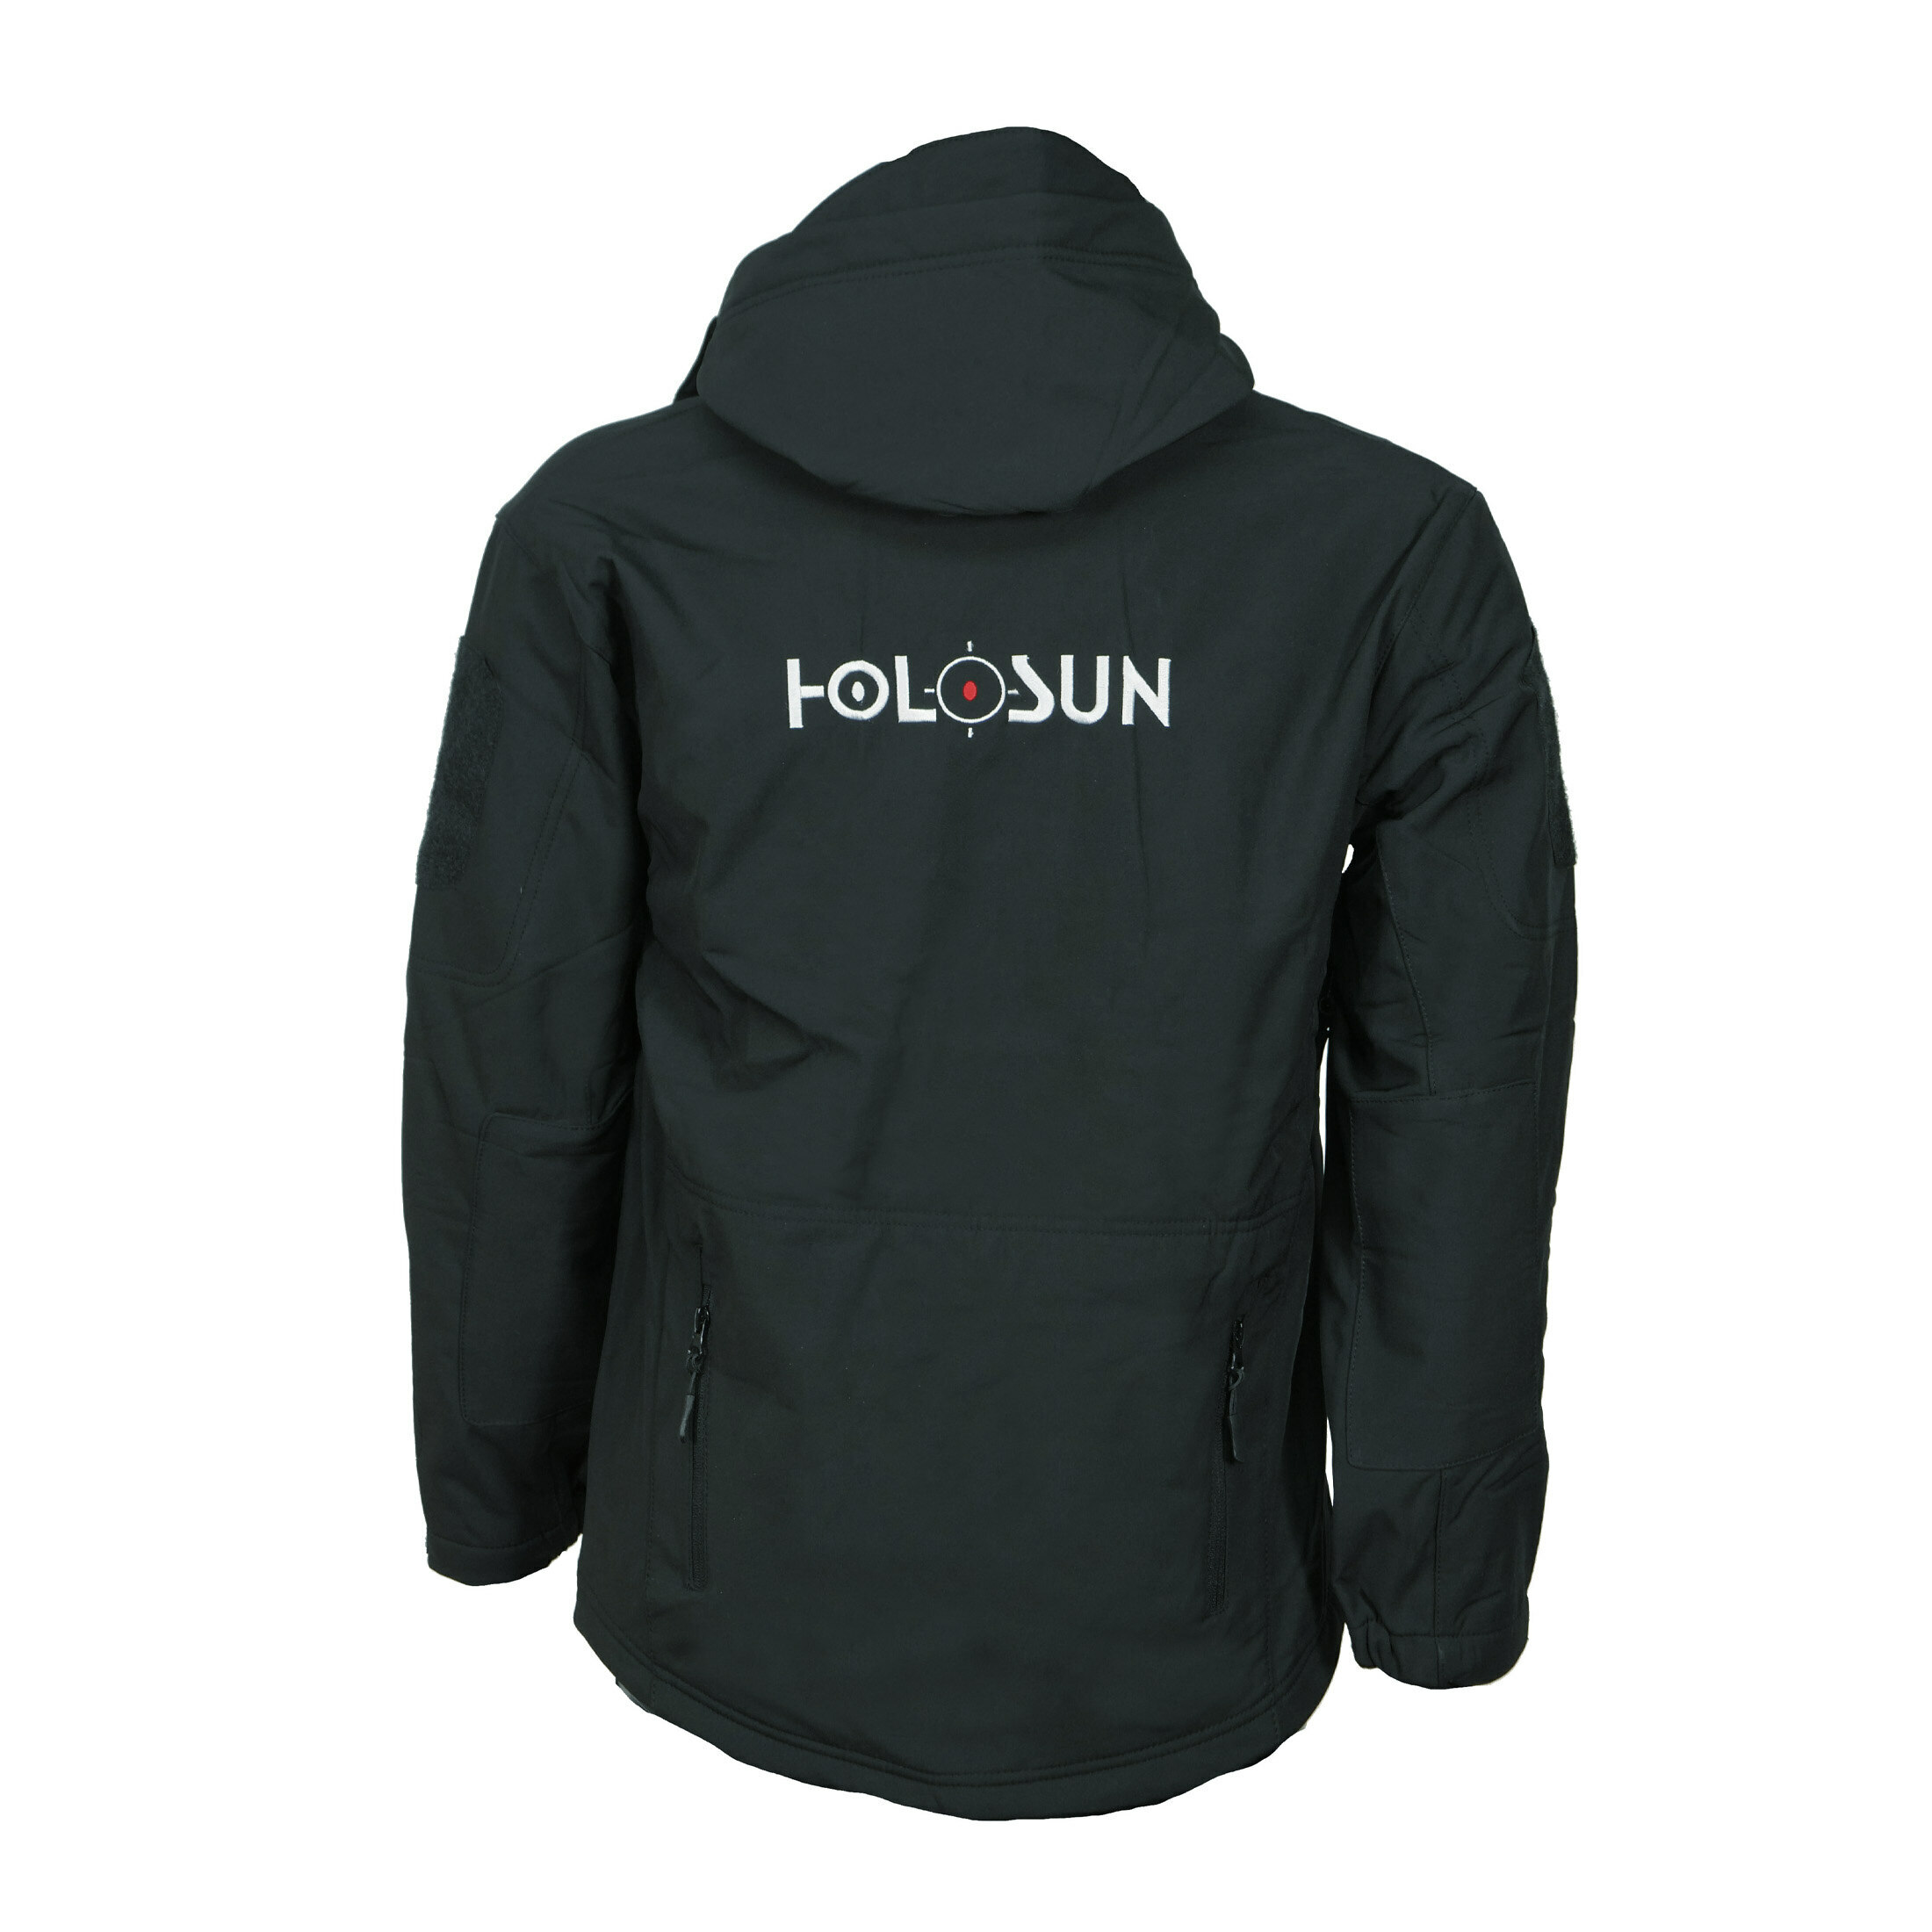 Leichte Softshell-Jacke Tactical mit Stick des HOLOSUN Logos